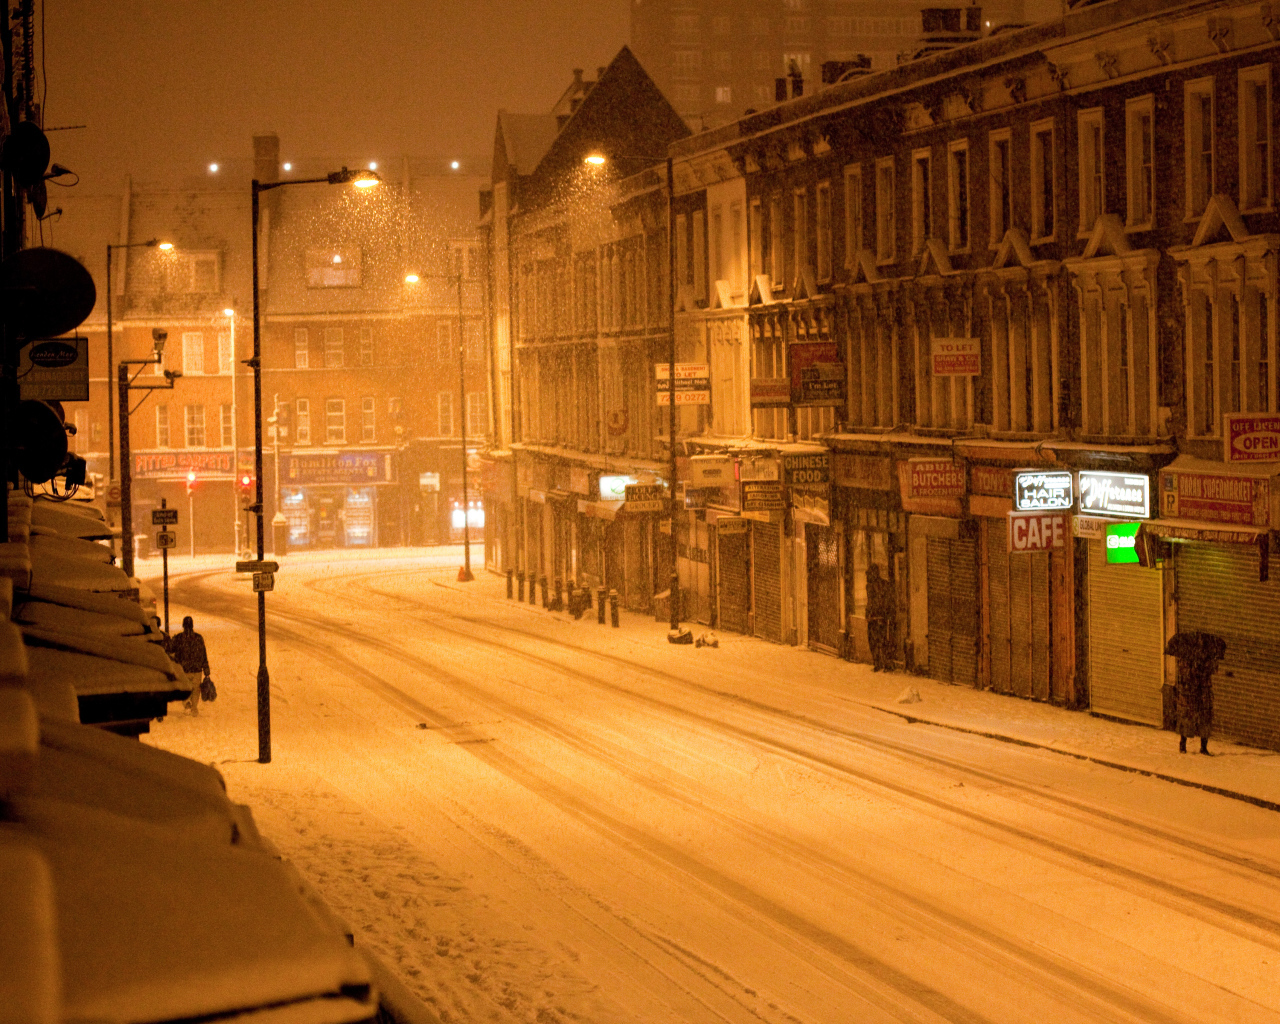 Snow in London Graham Road at night